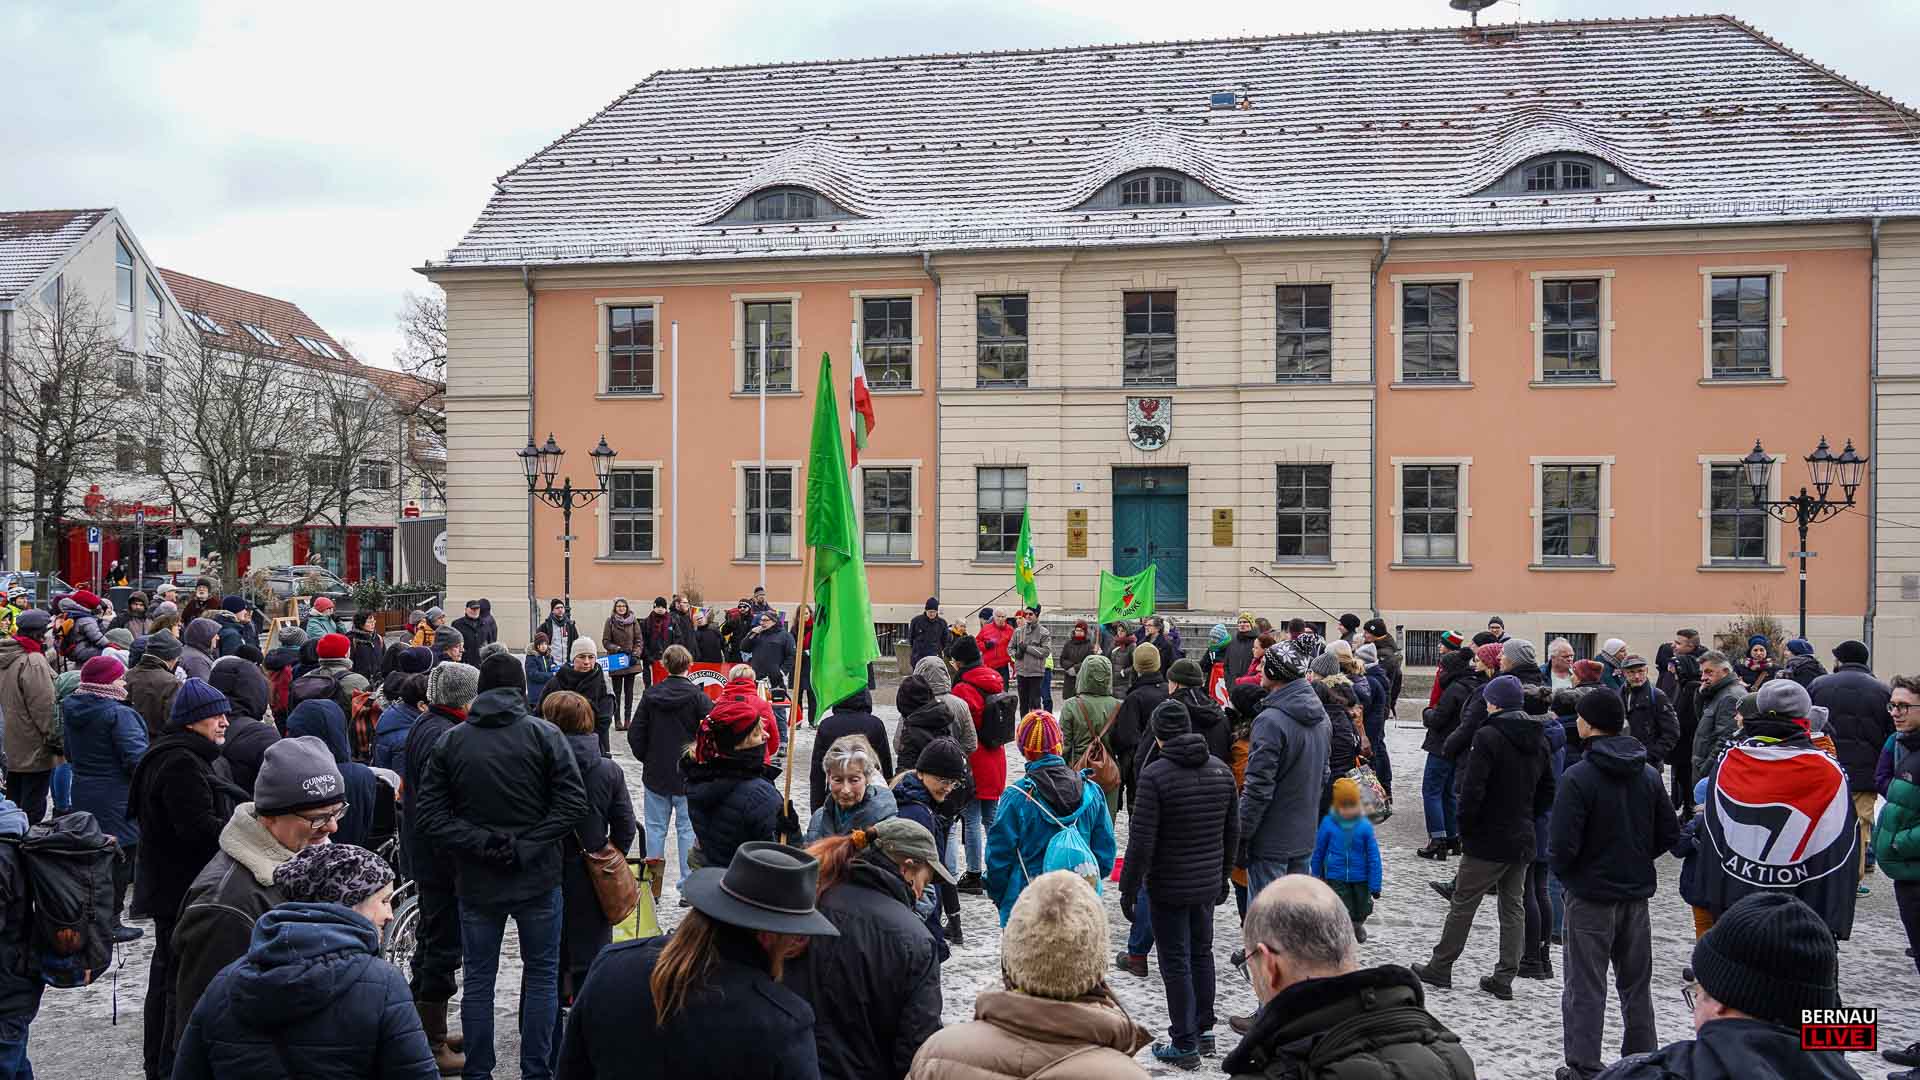 Demonstration gegen rechts auf dem Marktplatz in Bernau bei Berlin